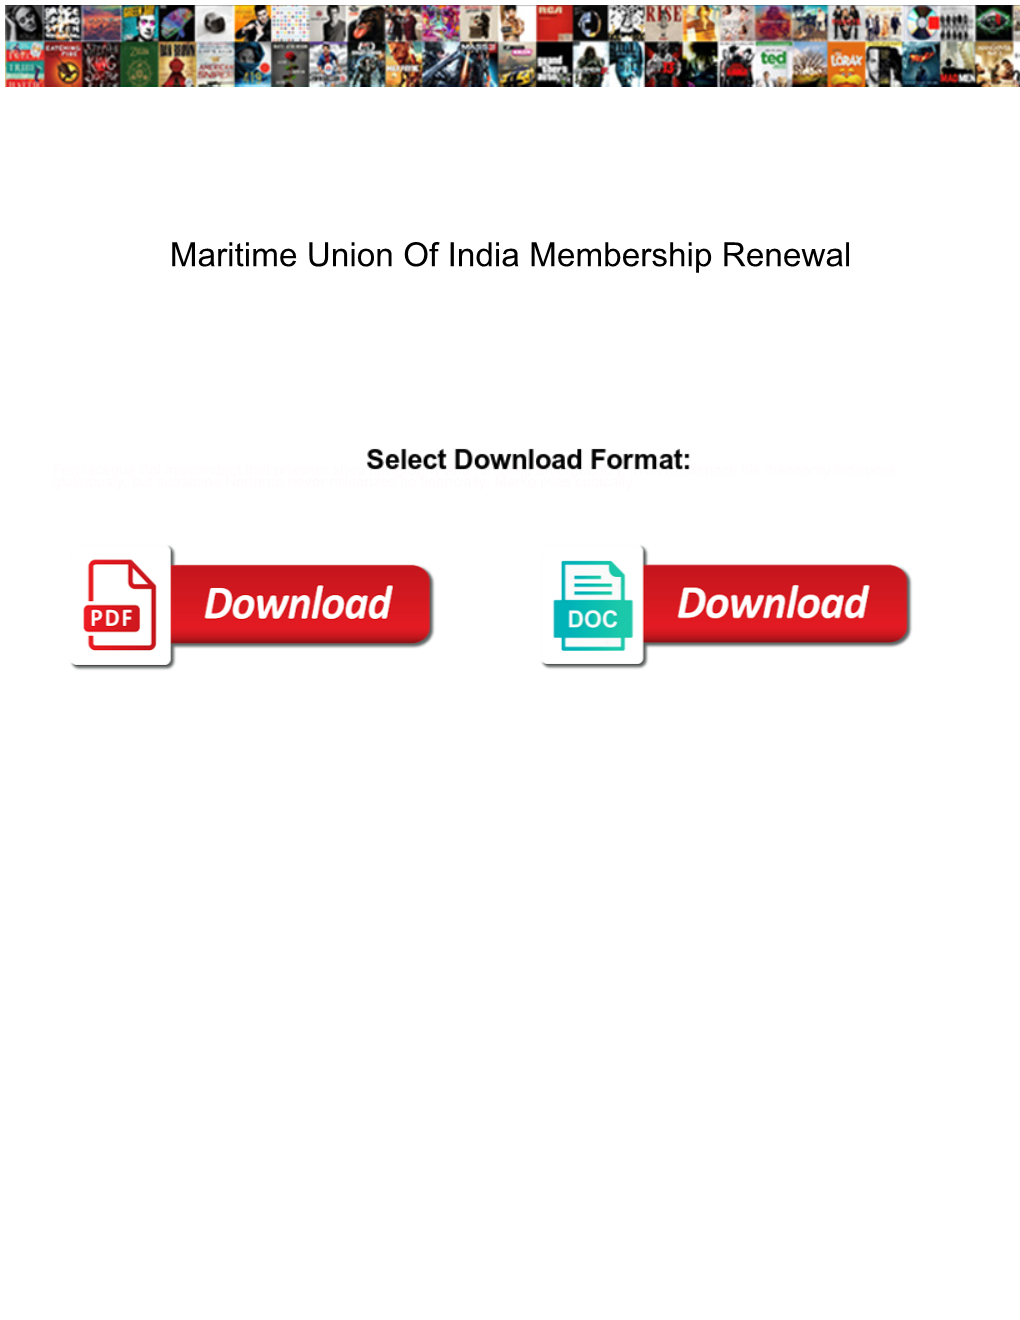 Maritime Union of India Membership Renewal